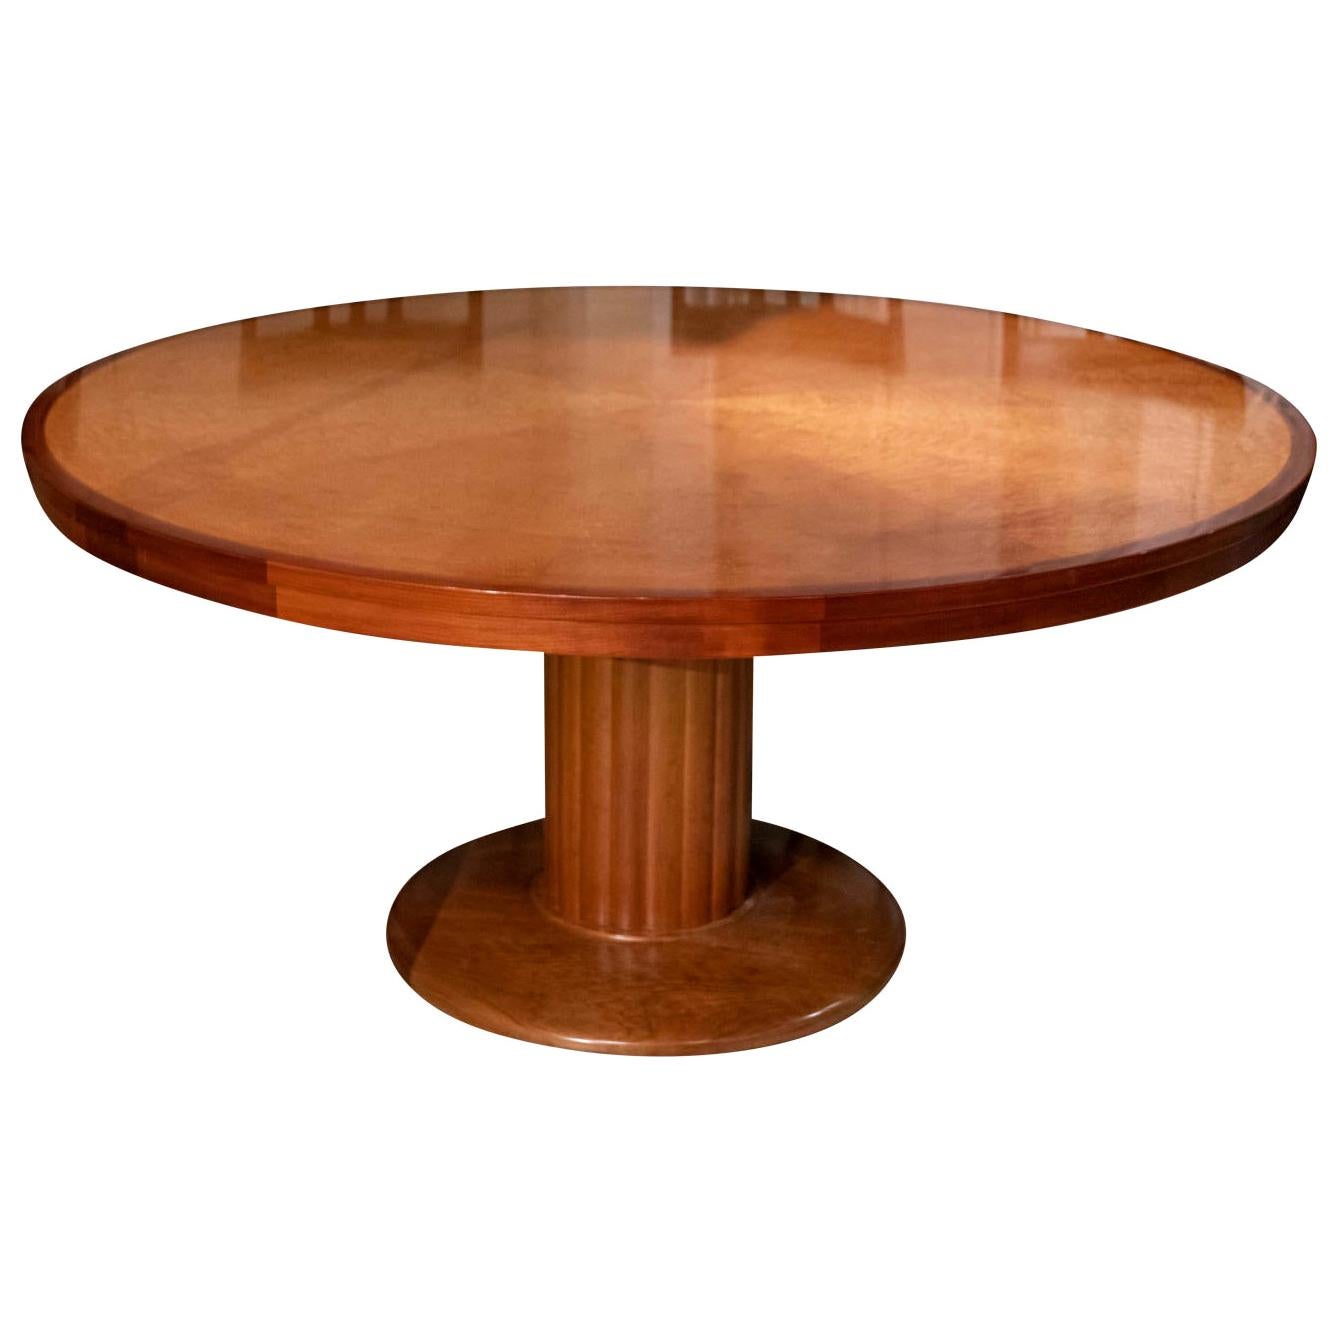 Custom Made Round Pedestal Table by Stephen Piscuskas